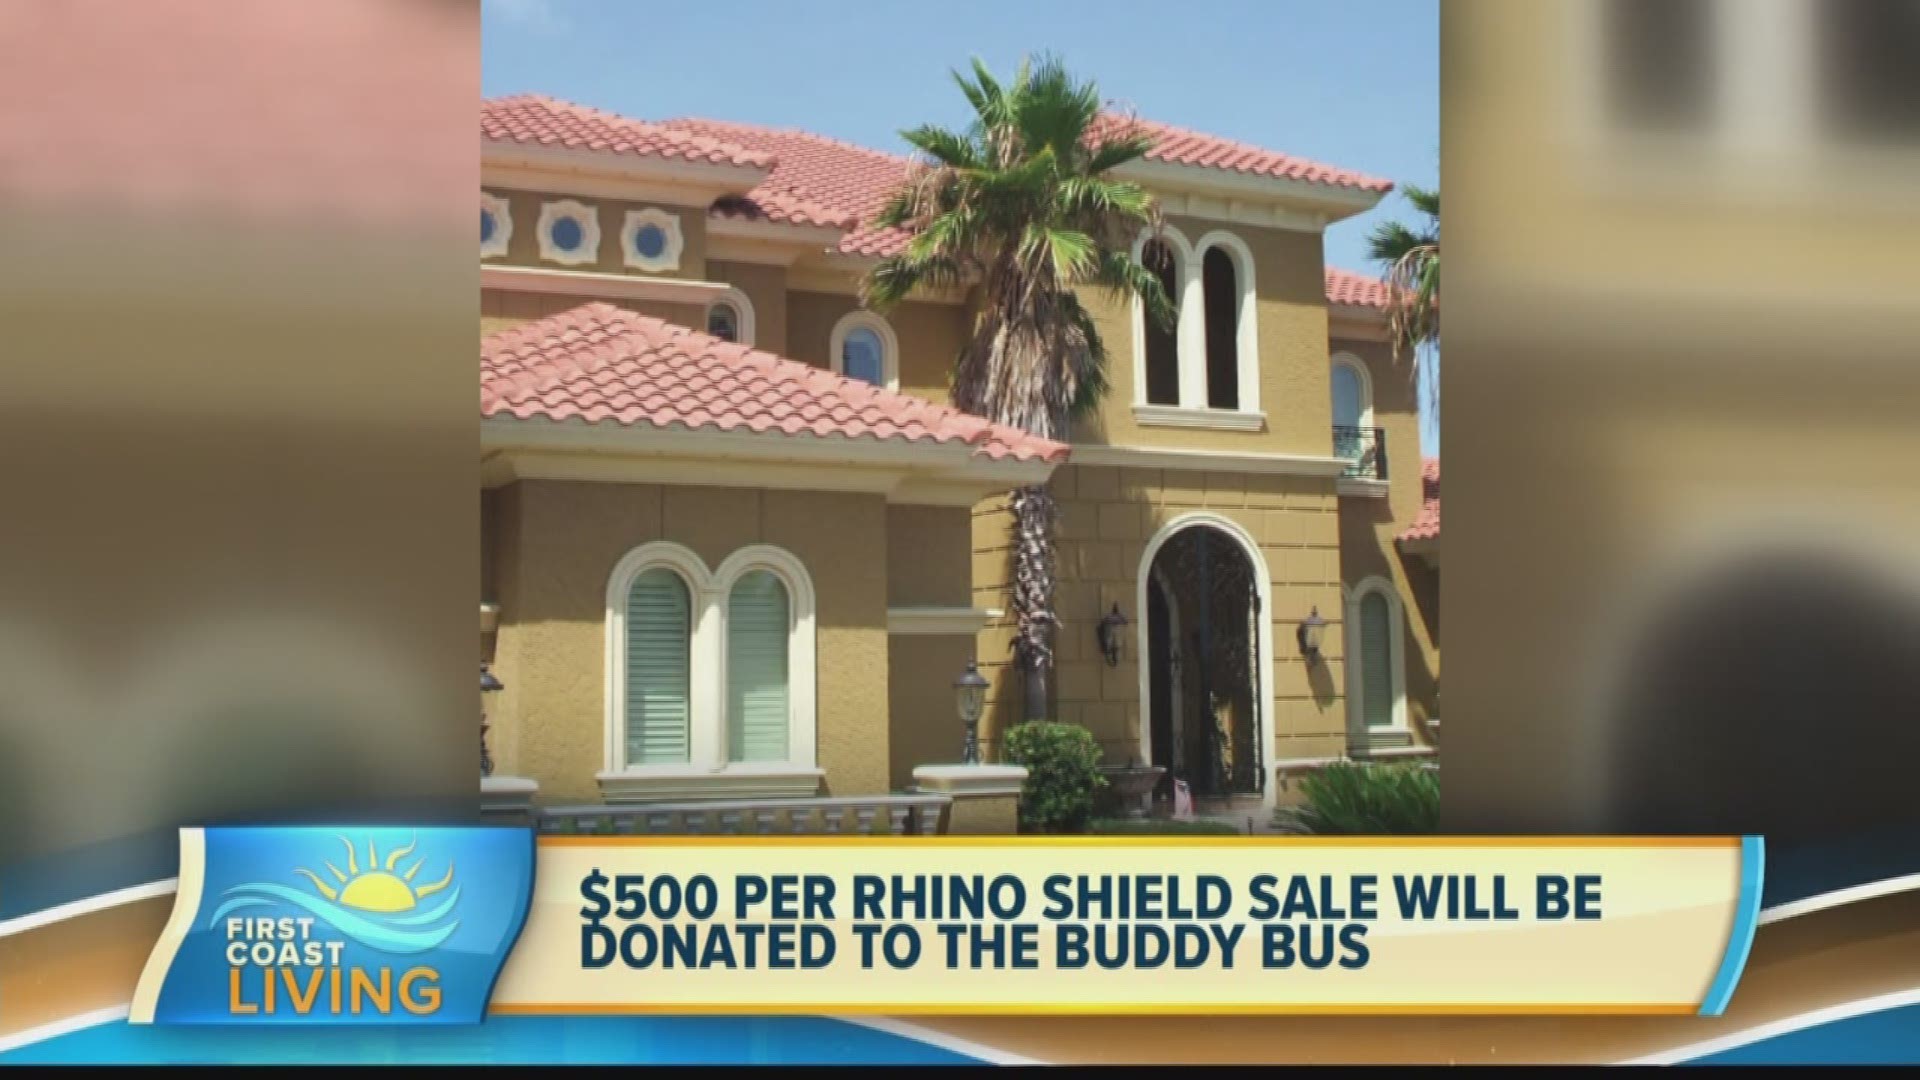 Jay Mariano, with Rhino Shield, says Rhino Shield is donating to the Buddy Bus!